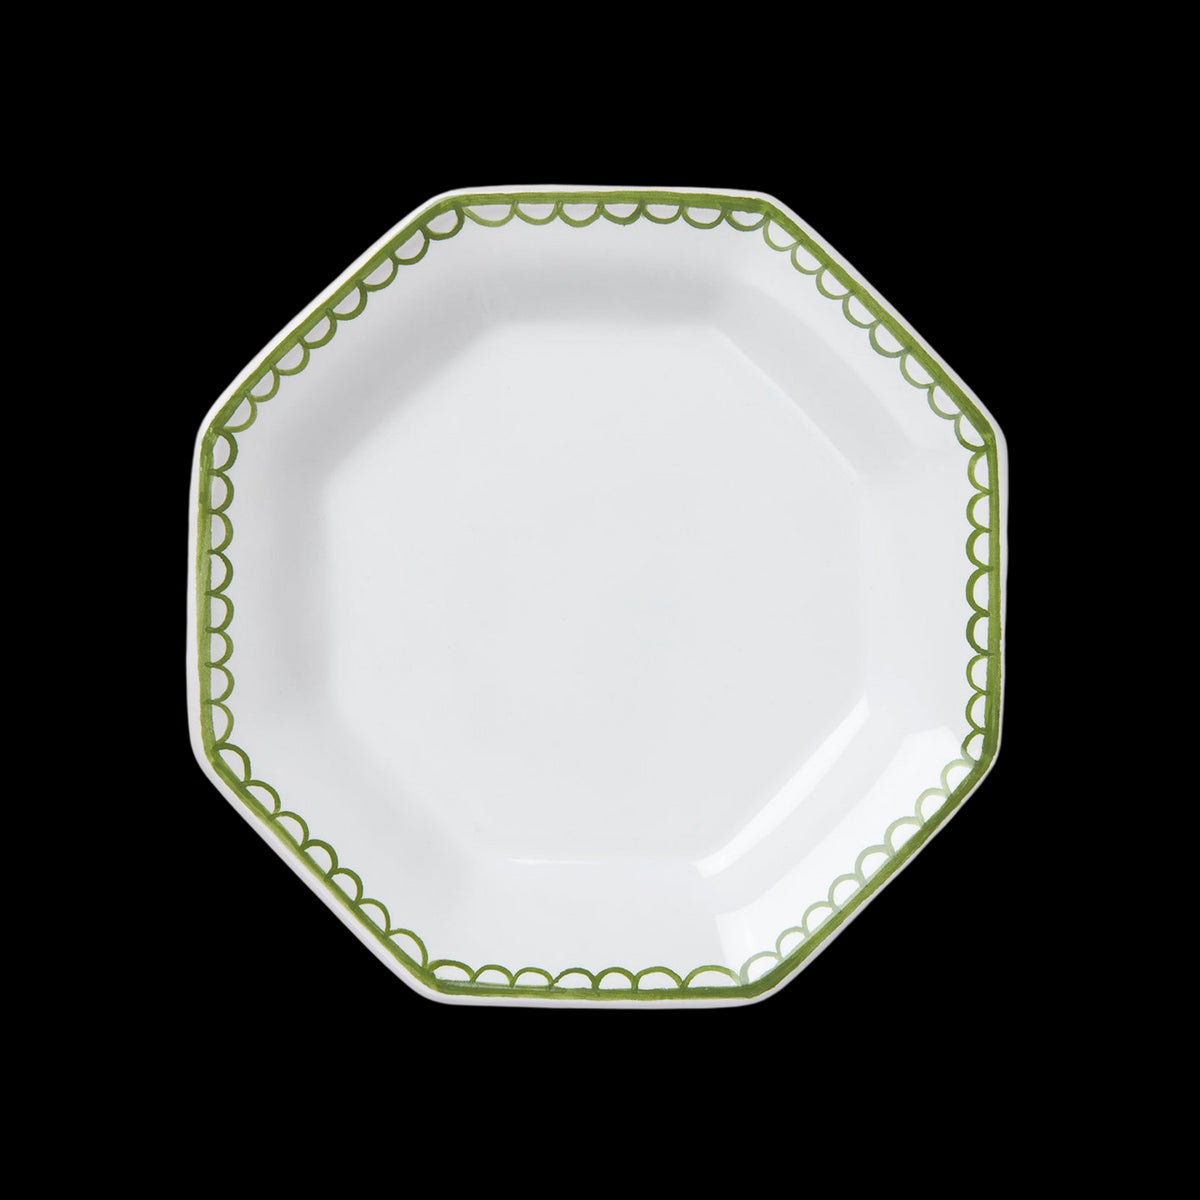 Bouclette Octagonal Petite Plate in Green